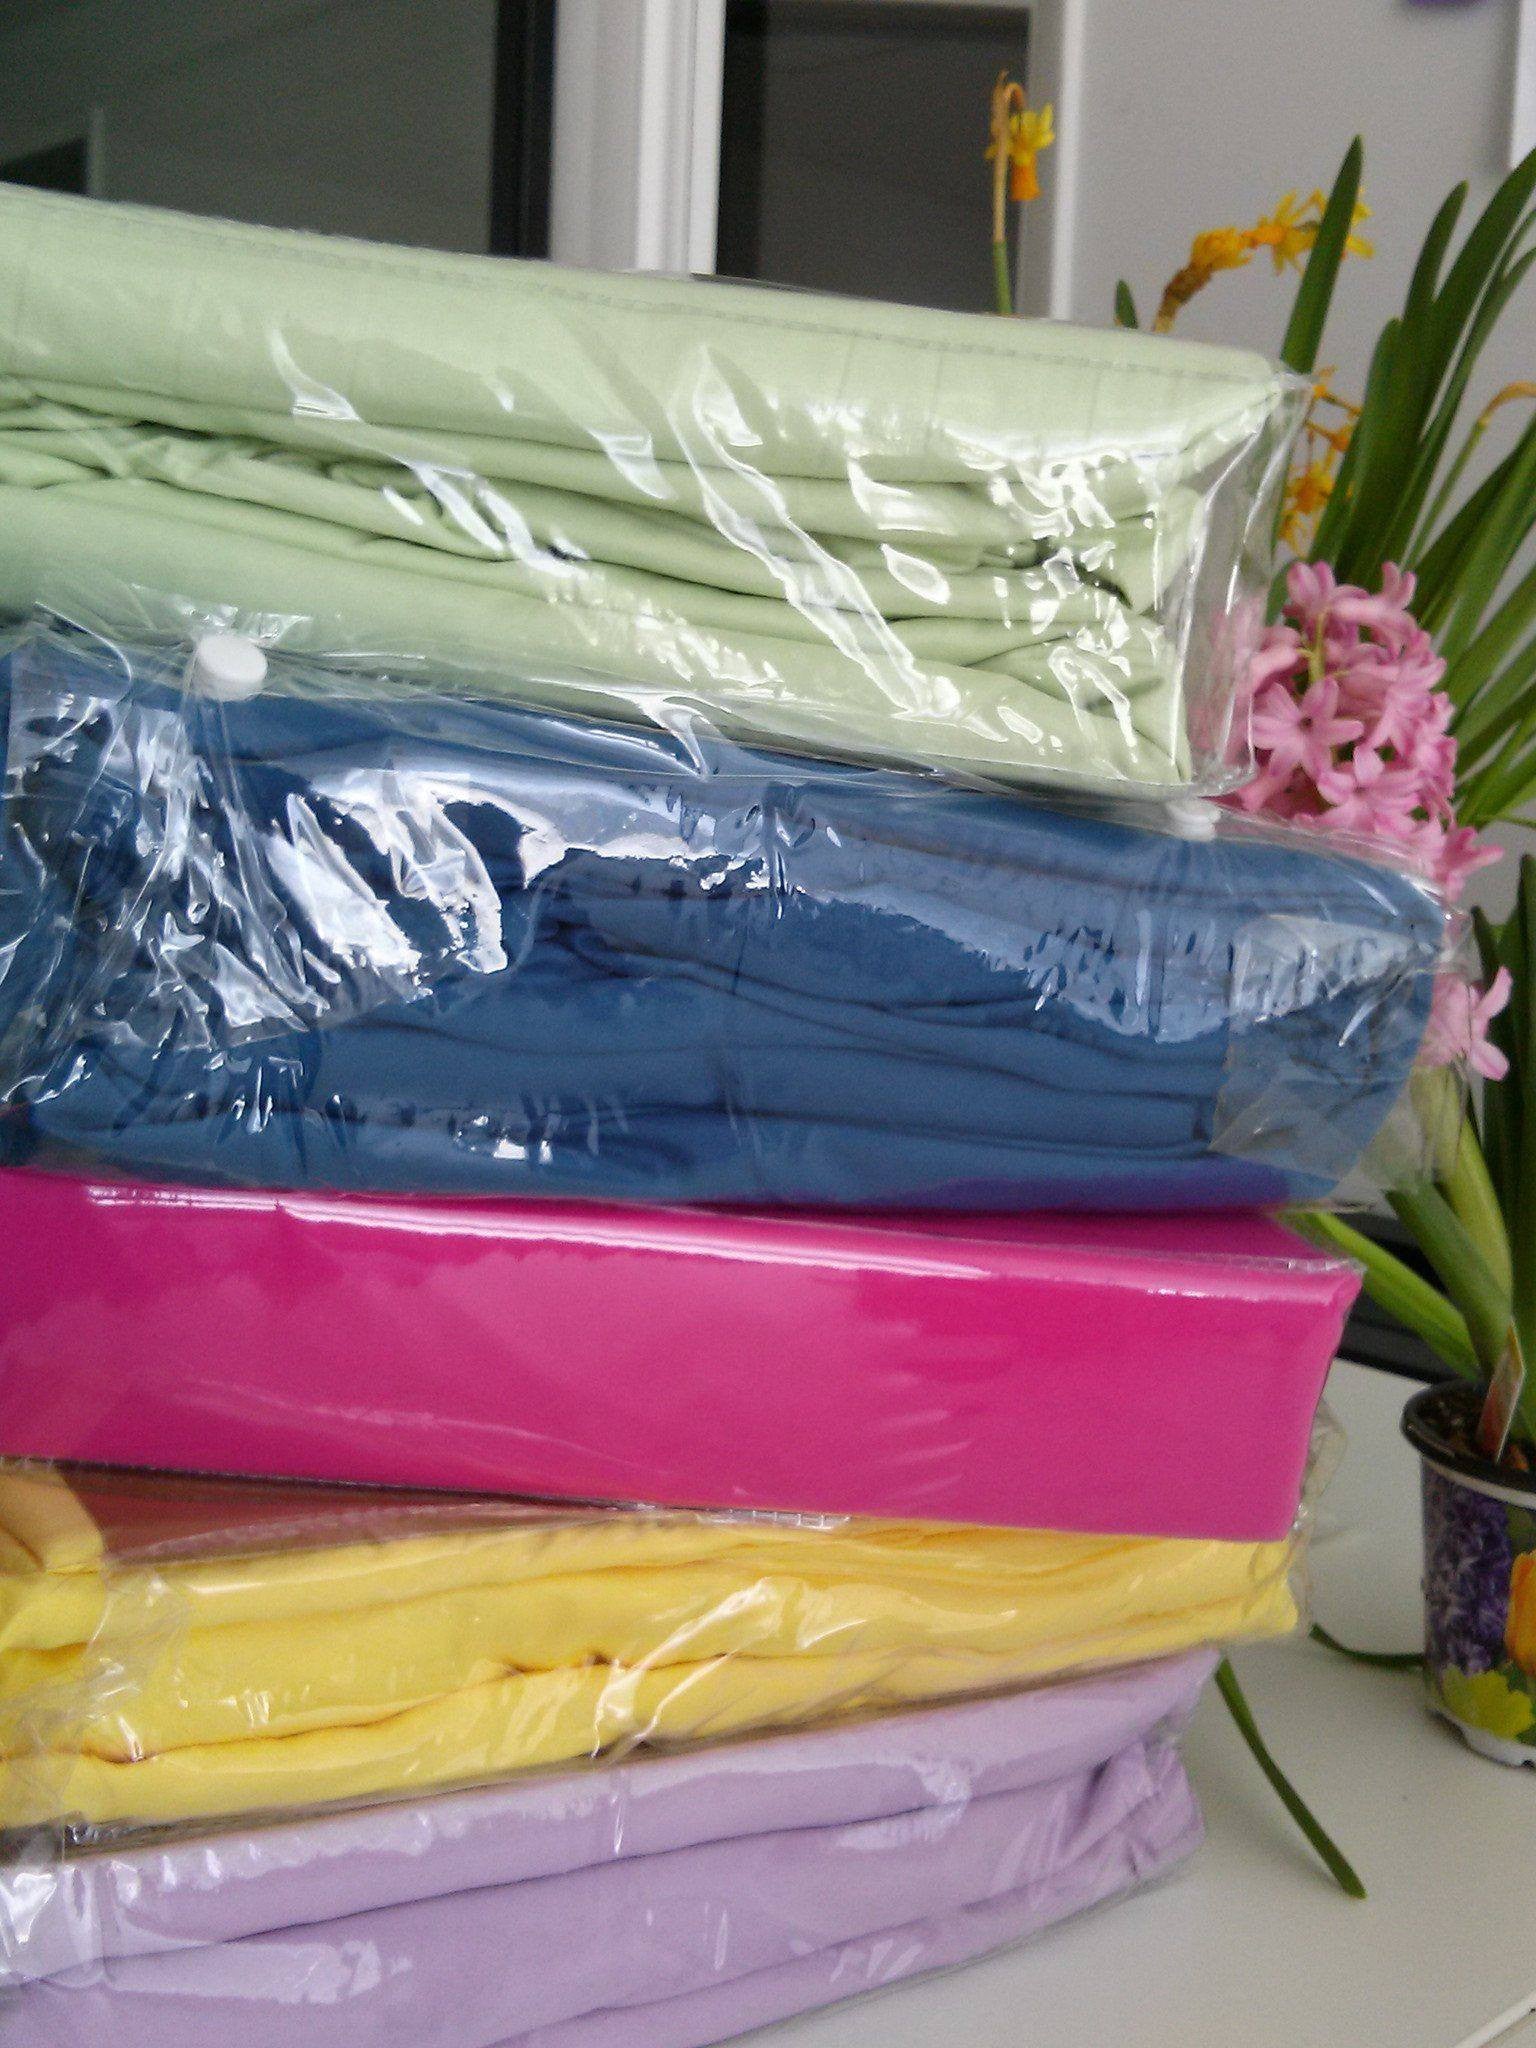 Tache Microfiber Rose Pink Bed Sheet Set (505-RP-BSS) - Tache Home Fashion